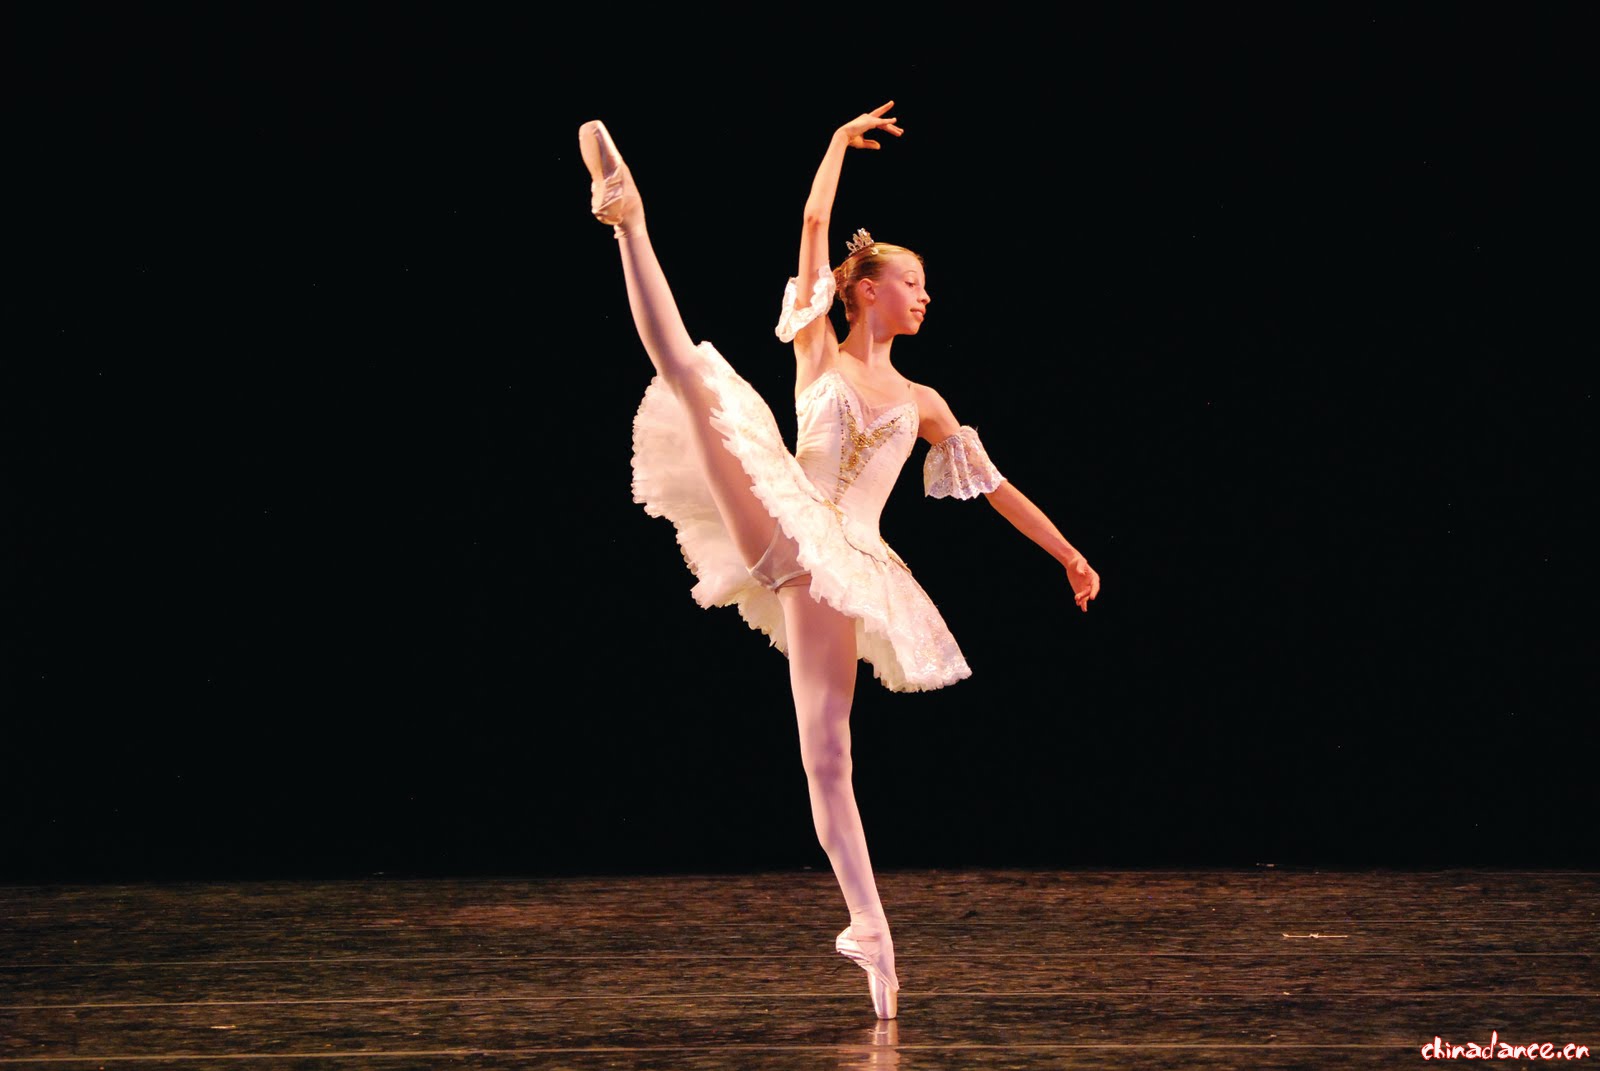 Ballet-Dancer-Feet.jpg